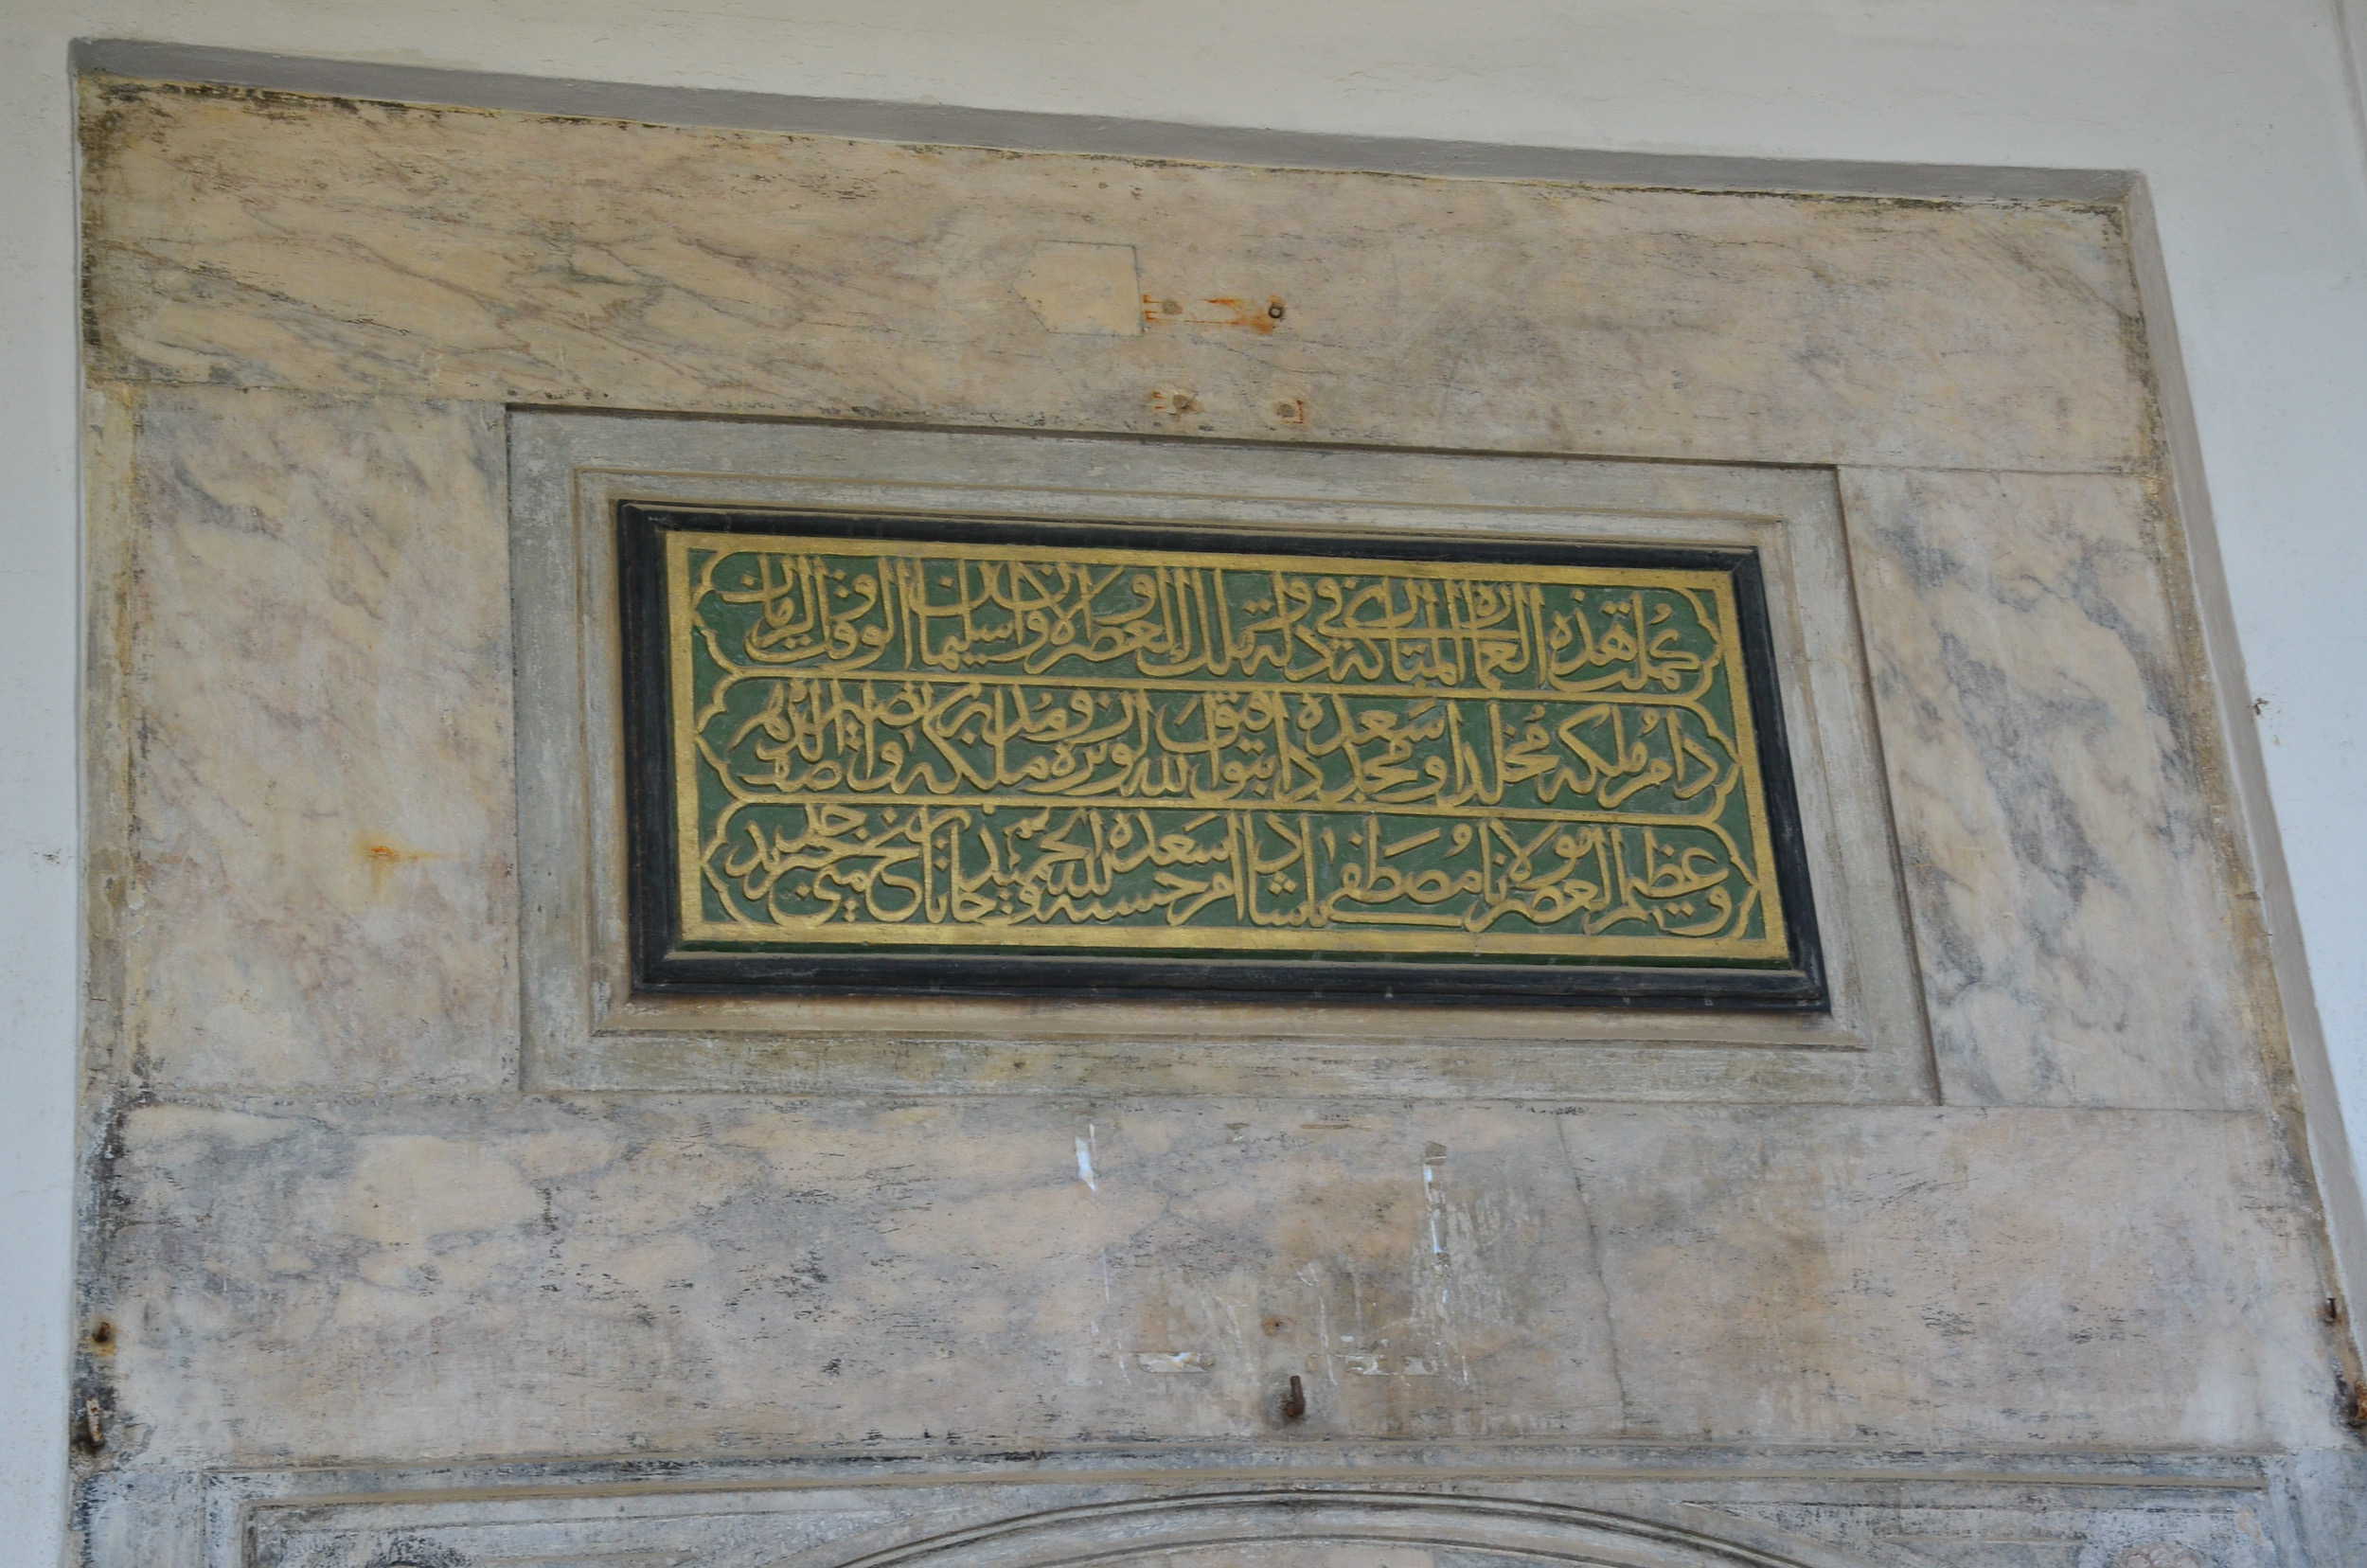 Inscription above the entrance of the Kurşunlu Mosque in Odunpazarı, Eskişehir, Turkey